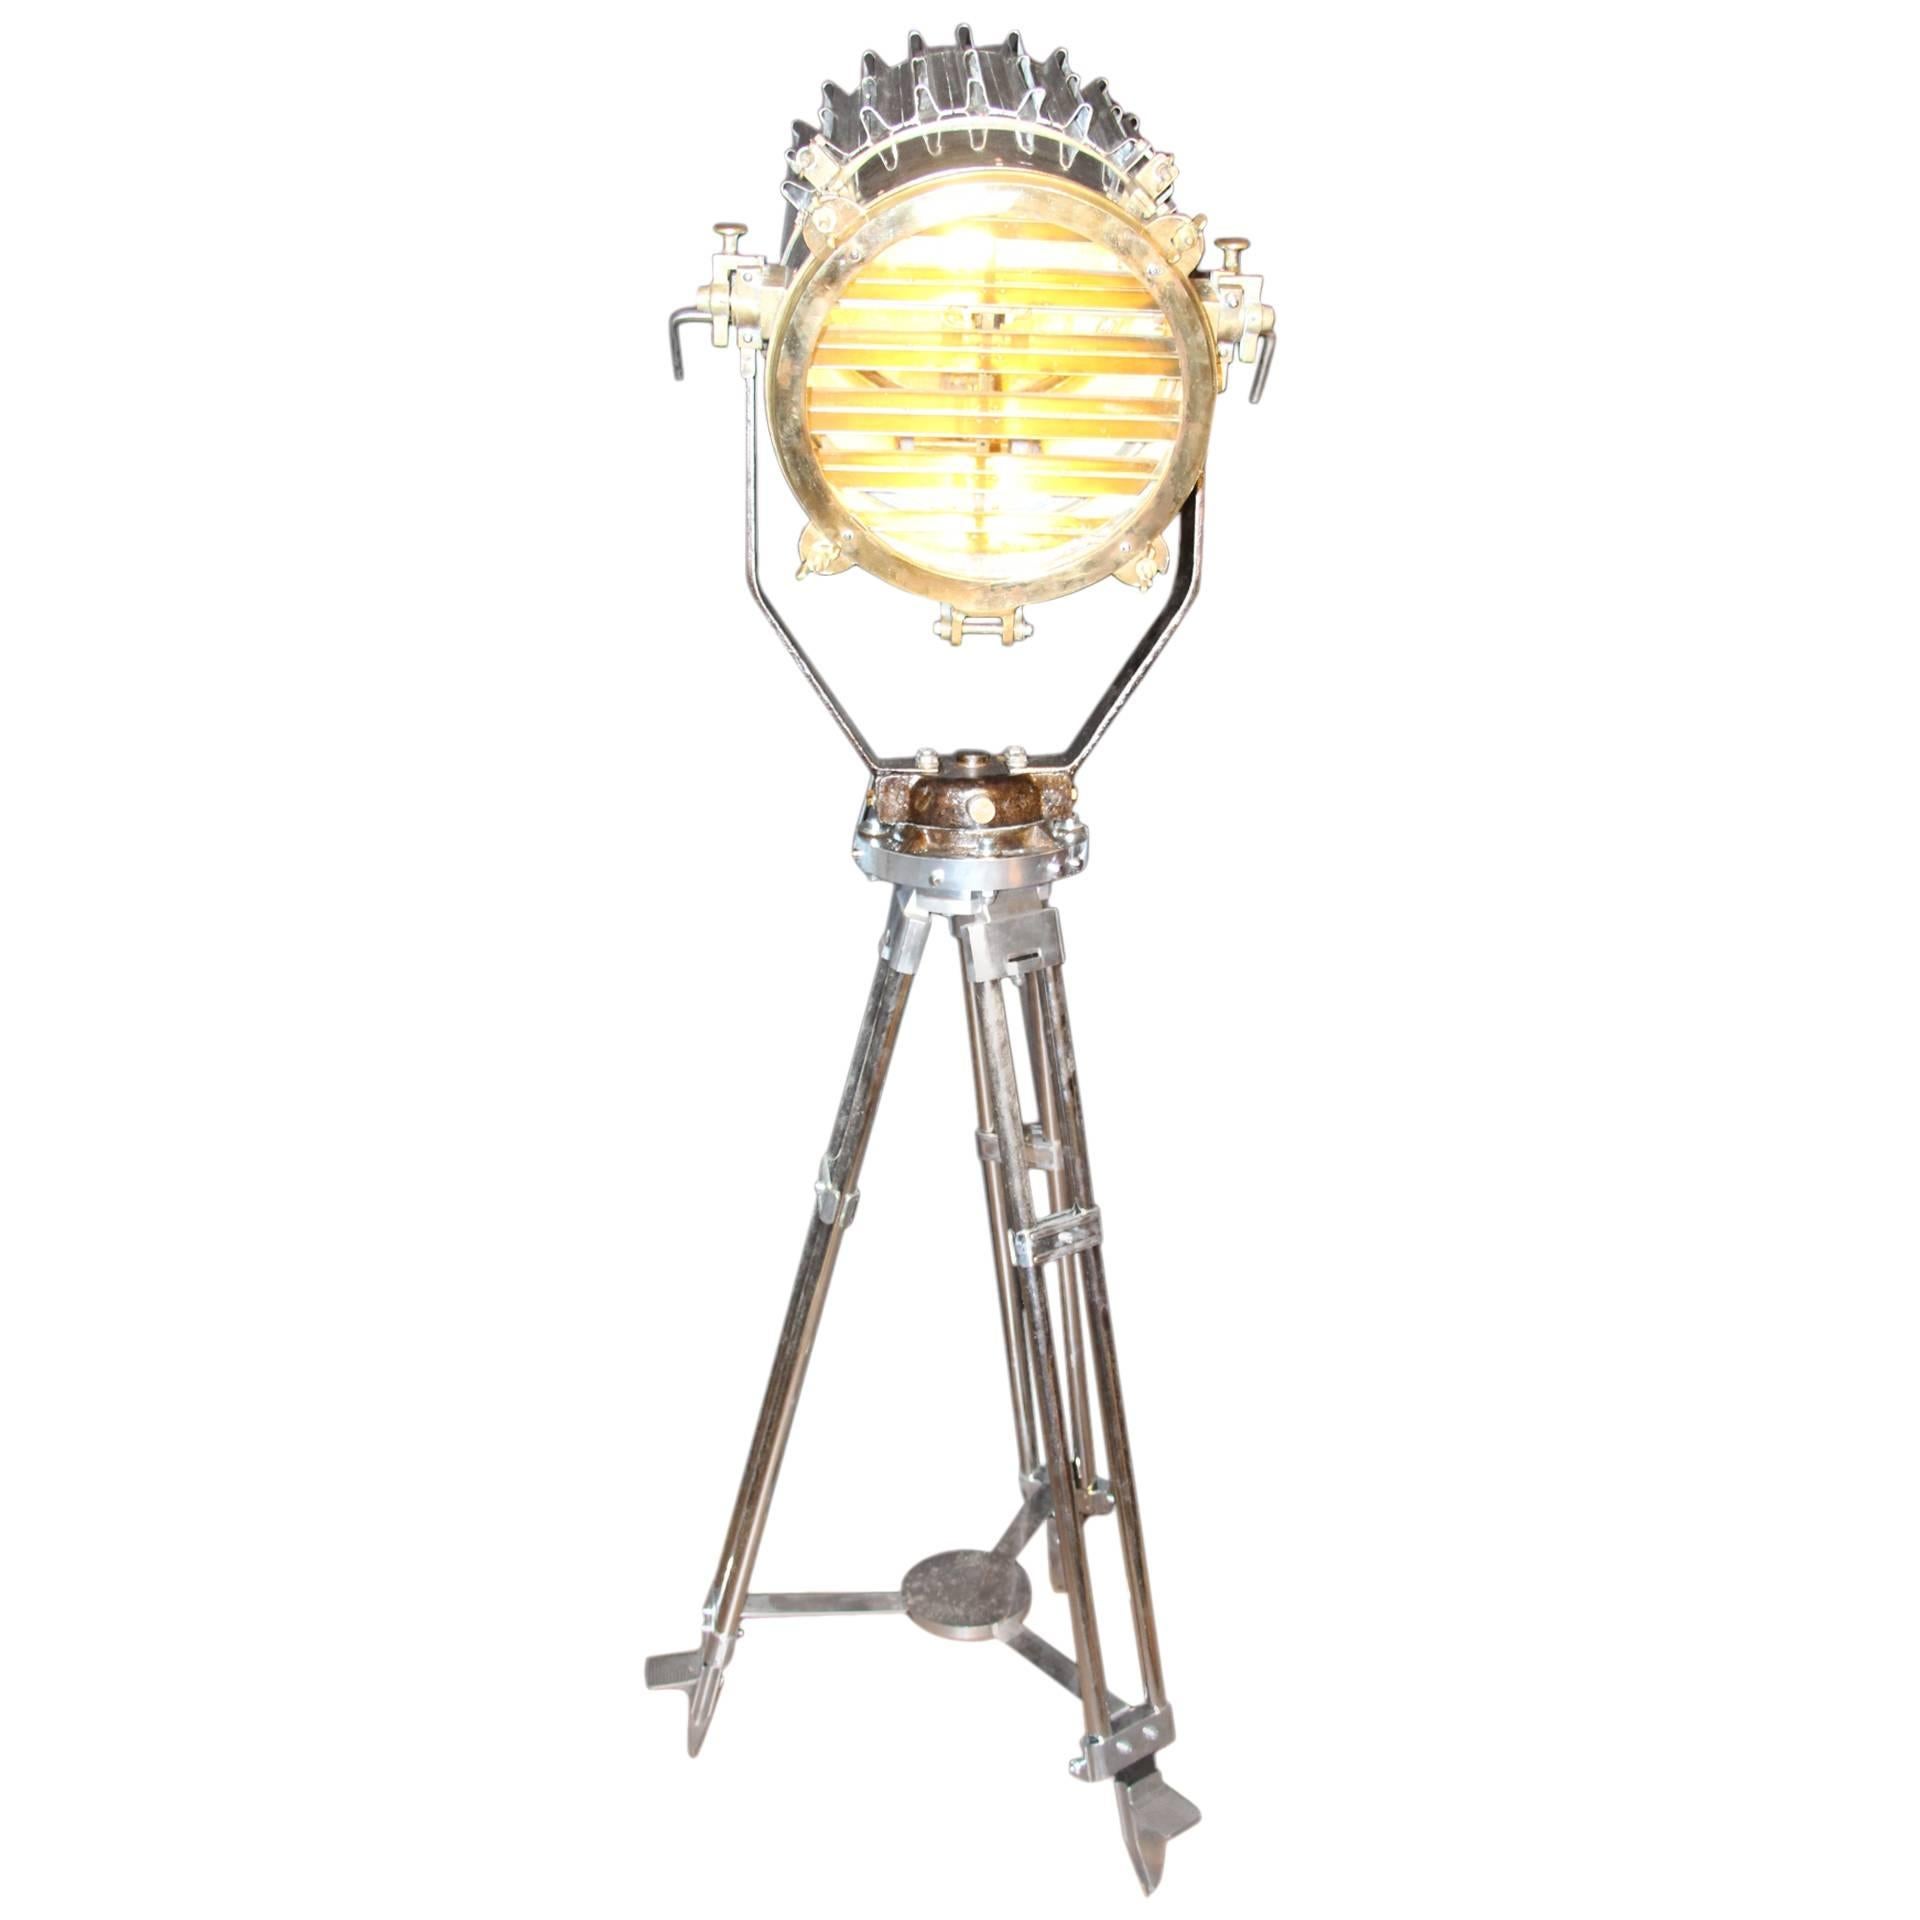  Spectacular Vintage Signal Lamp